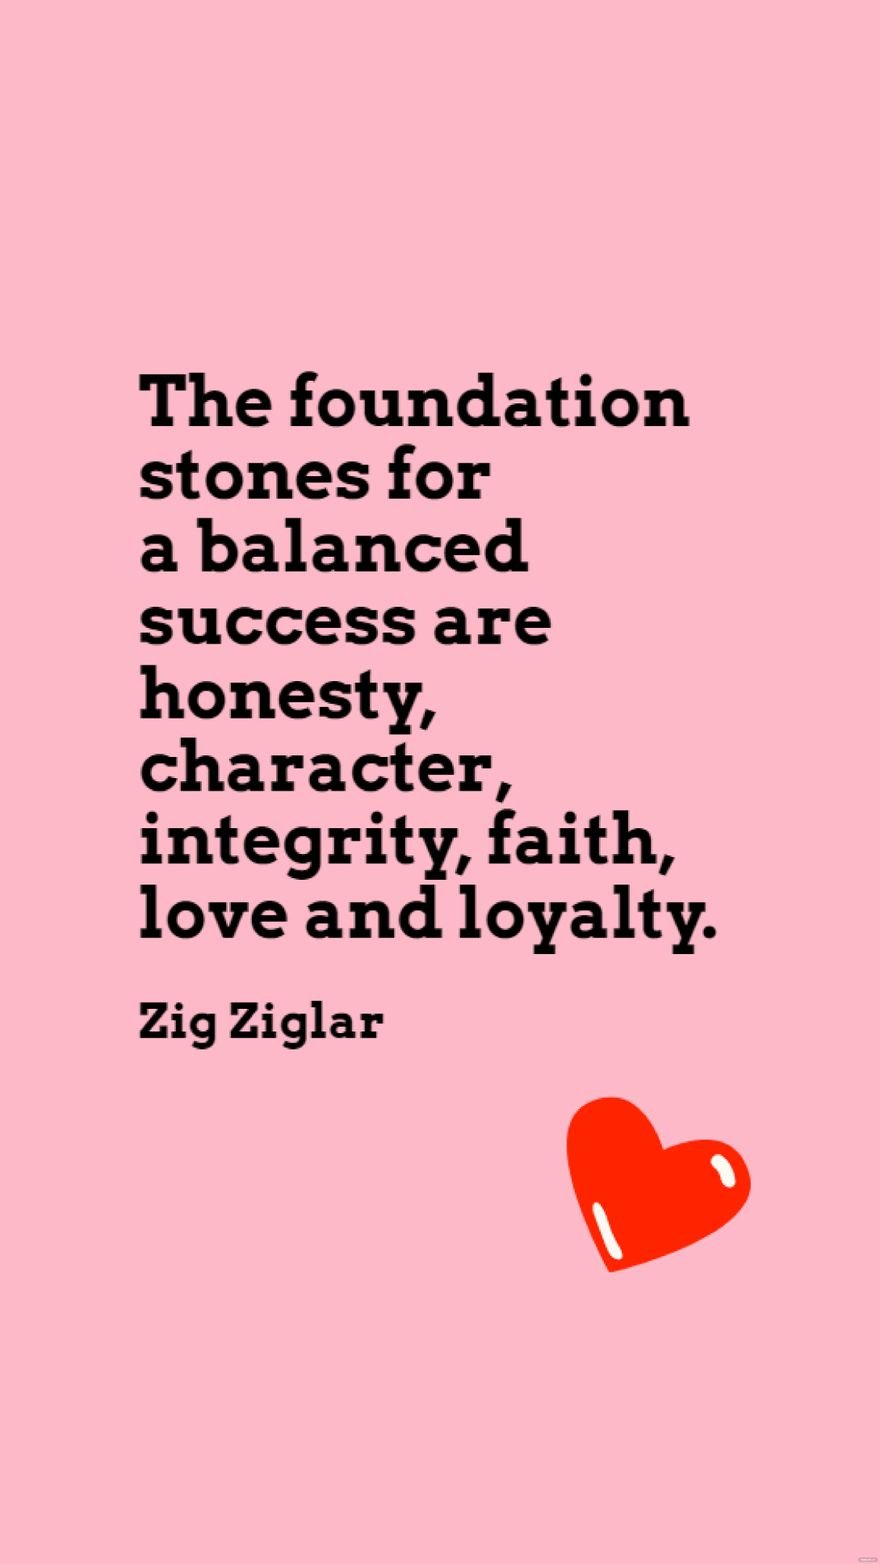 Zig Ziglar - The foundation stones for a balanced success are honesty, character, integrity, faith, love and loyalty.